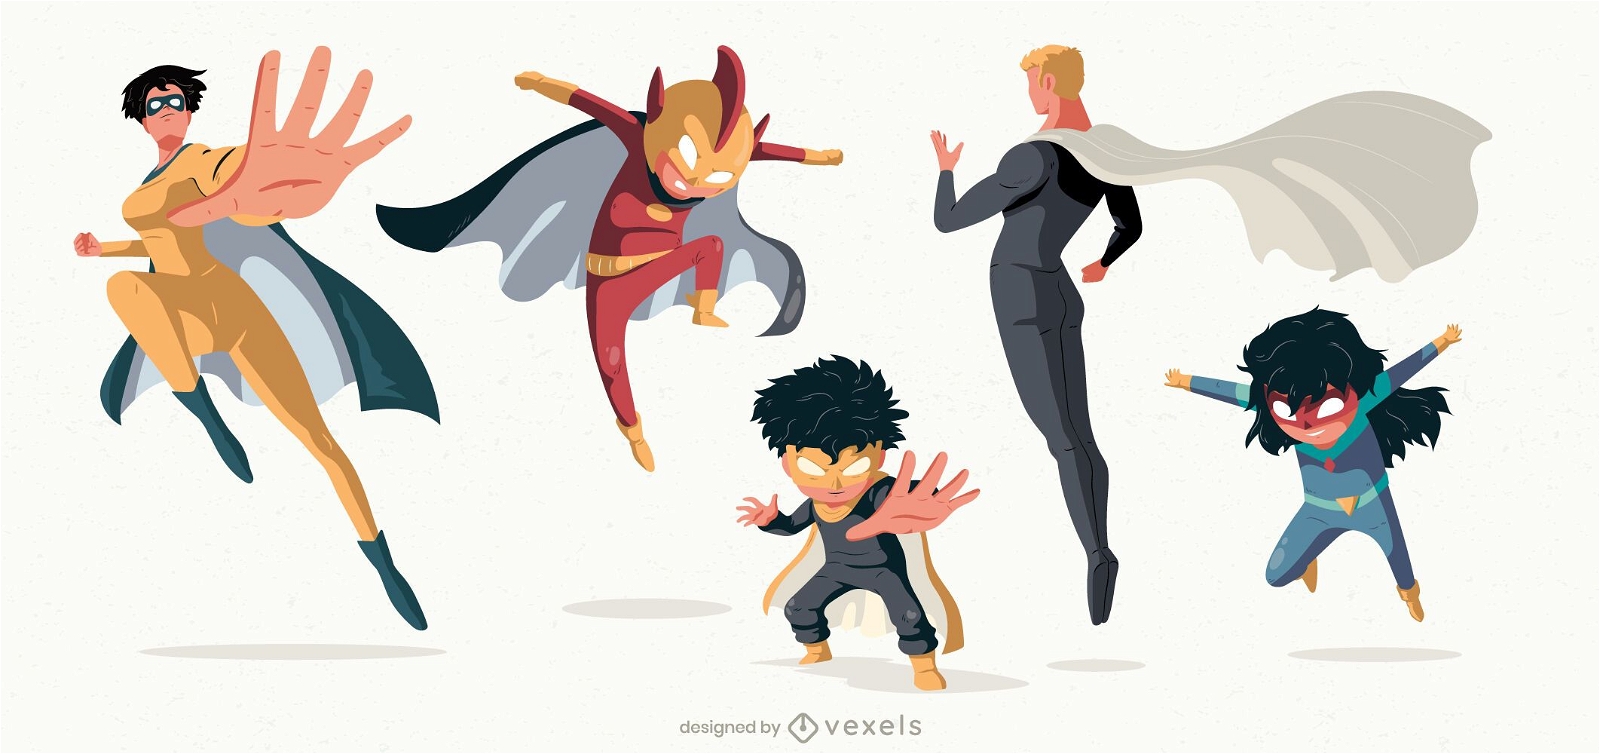 100,000 Superhero pose Vector Images | Depositphotos